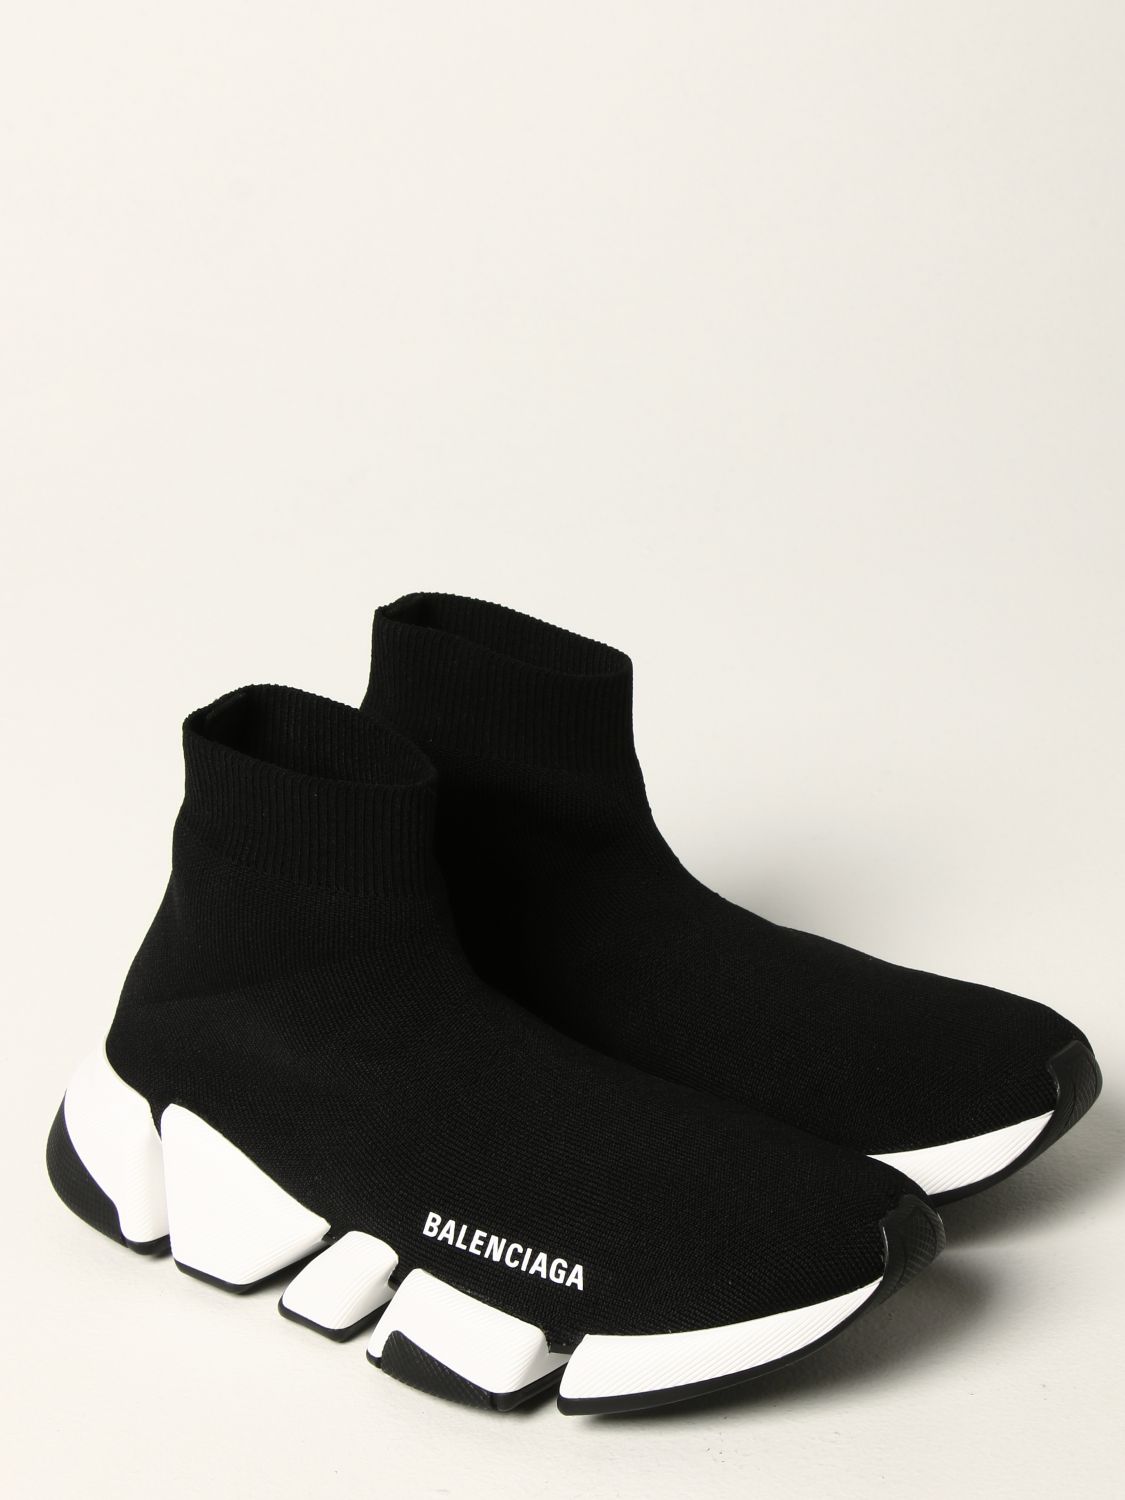 BALENCIAGA: Sneakers Speed 2.0 a calza | Sneakers Balenciaga Donna Nero |  Sneakers Balenciaga 617196 W2DB2 GIGLIO.COM